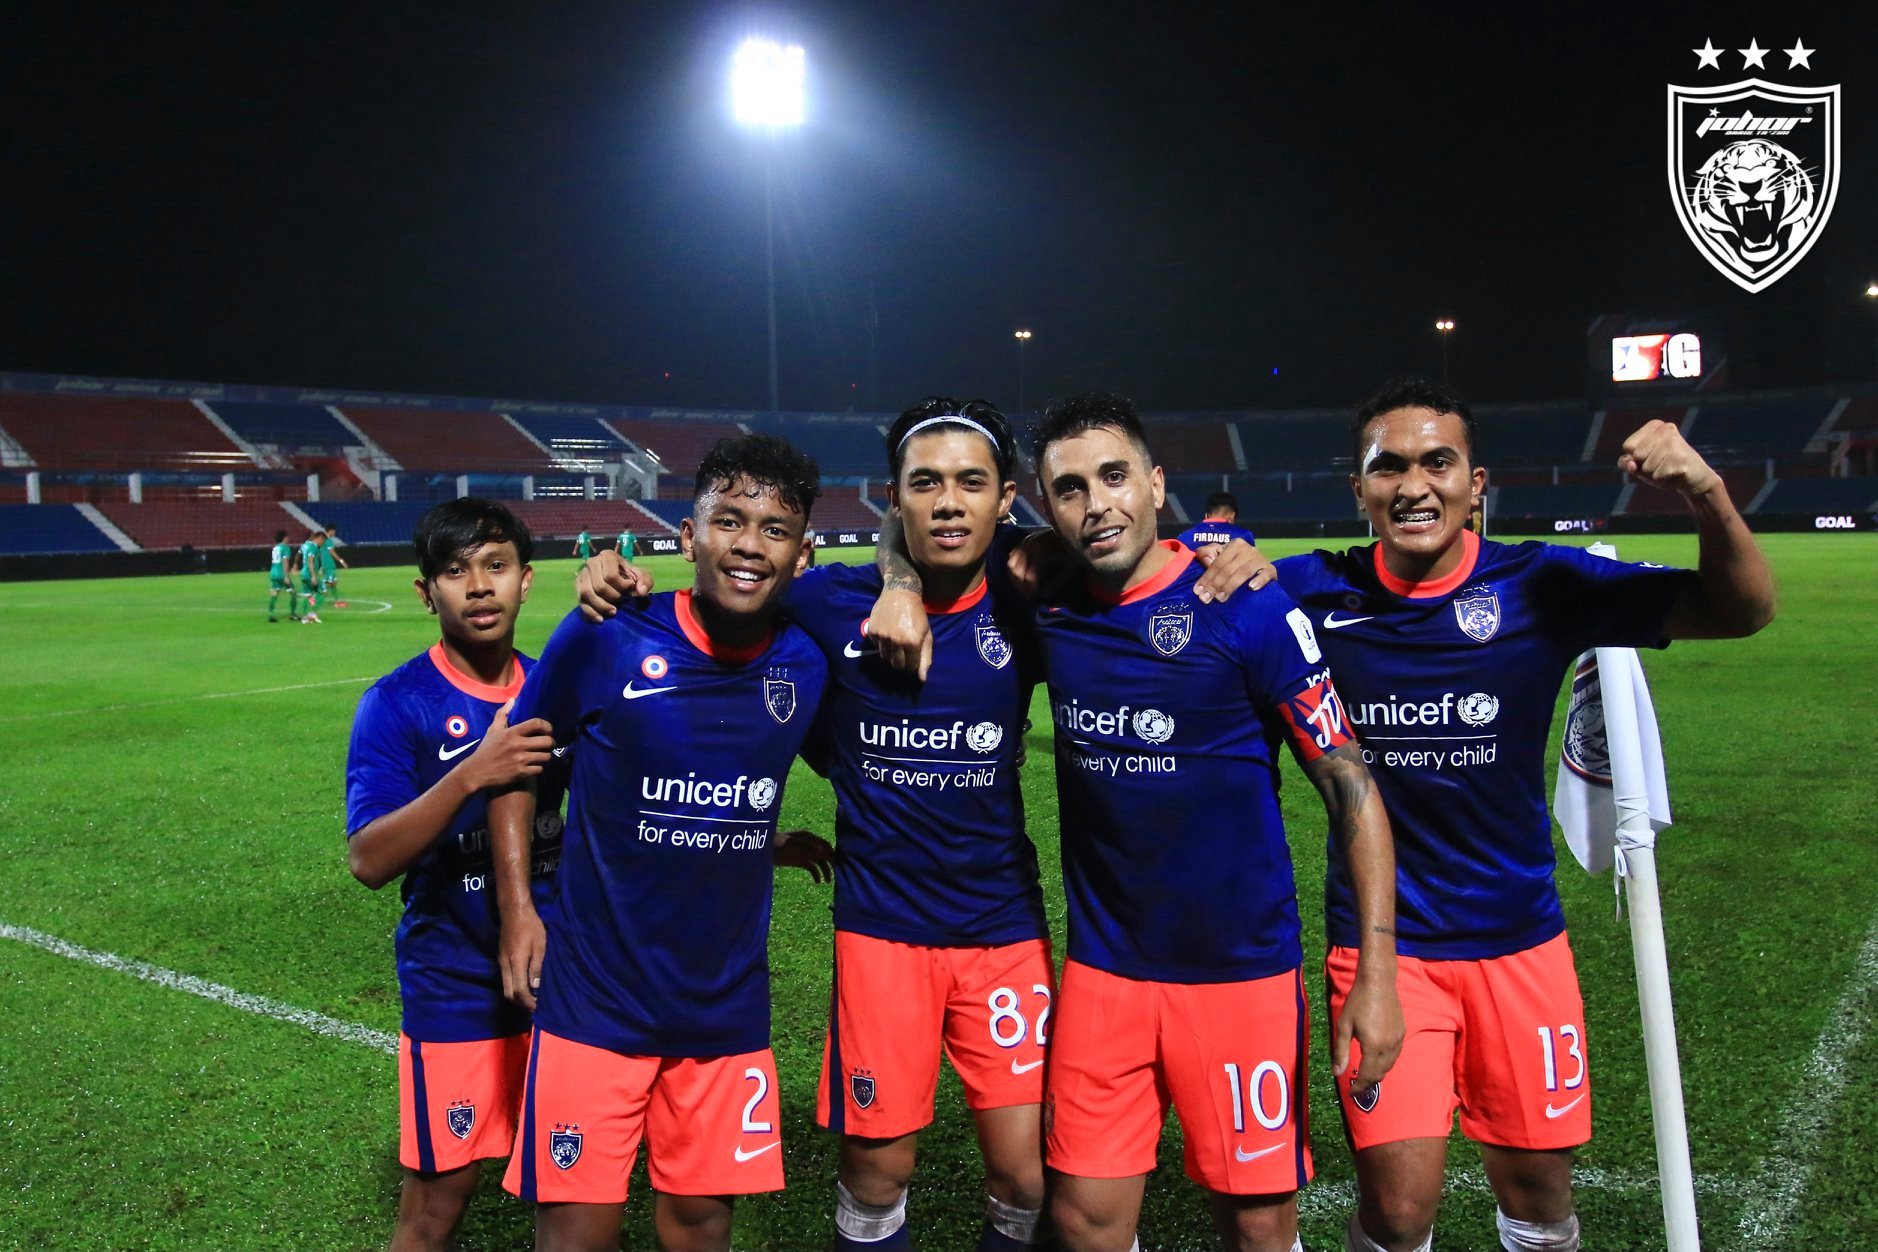 Keputusan liga perdana malaysia 2021 terkini